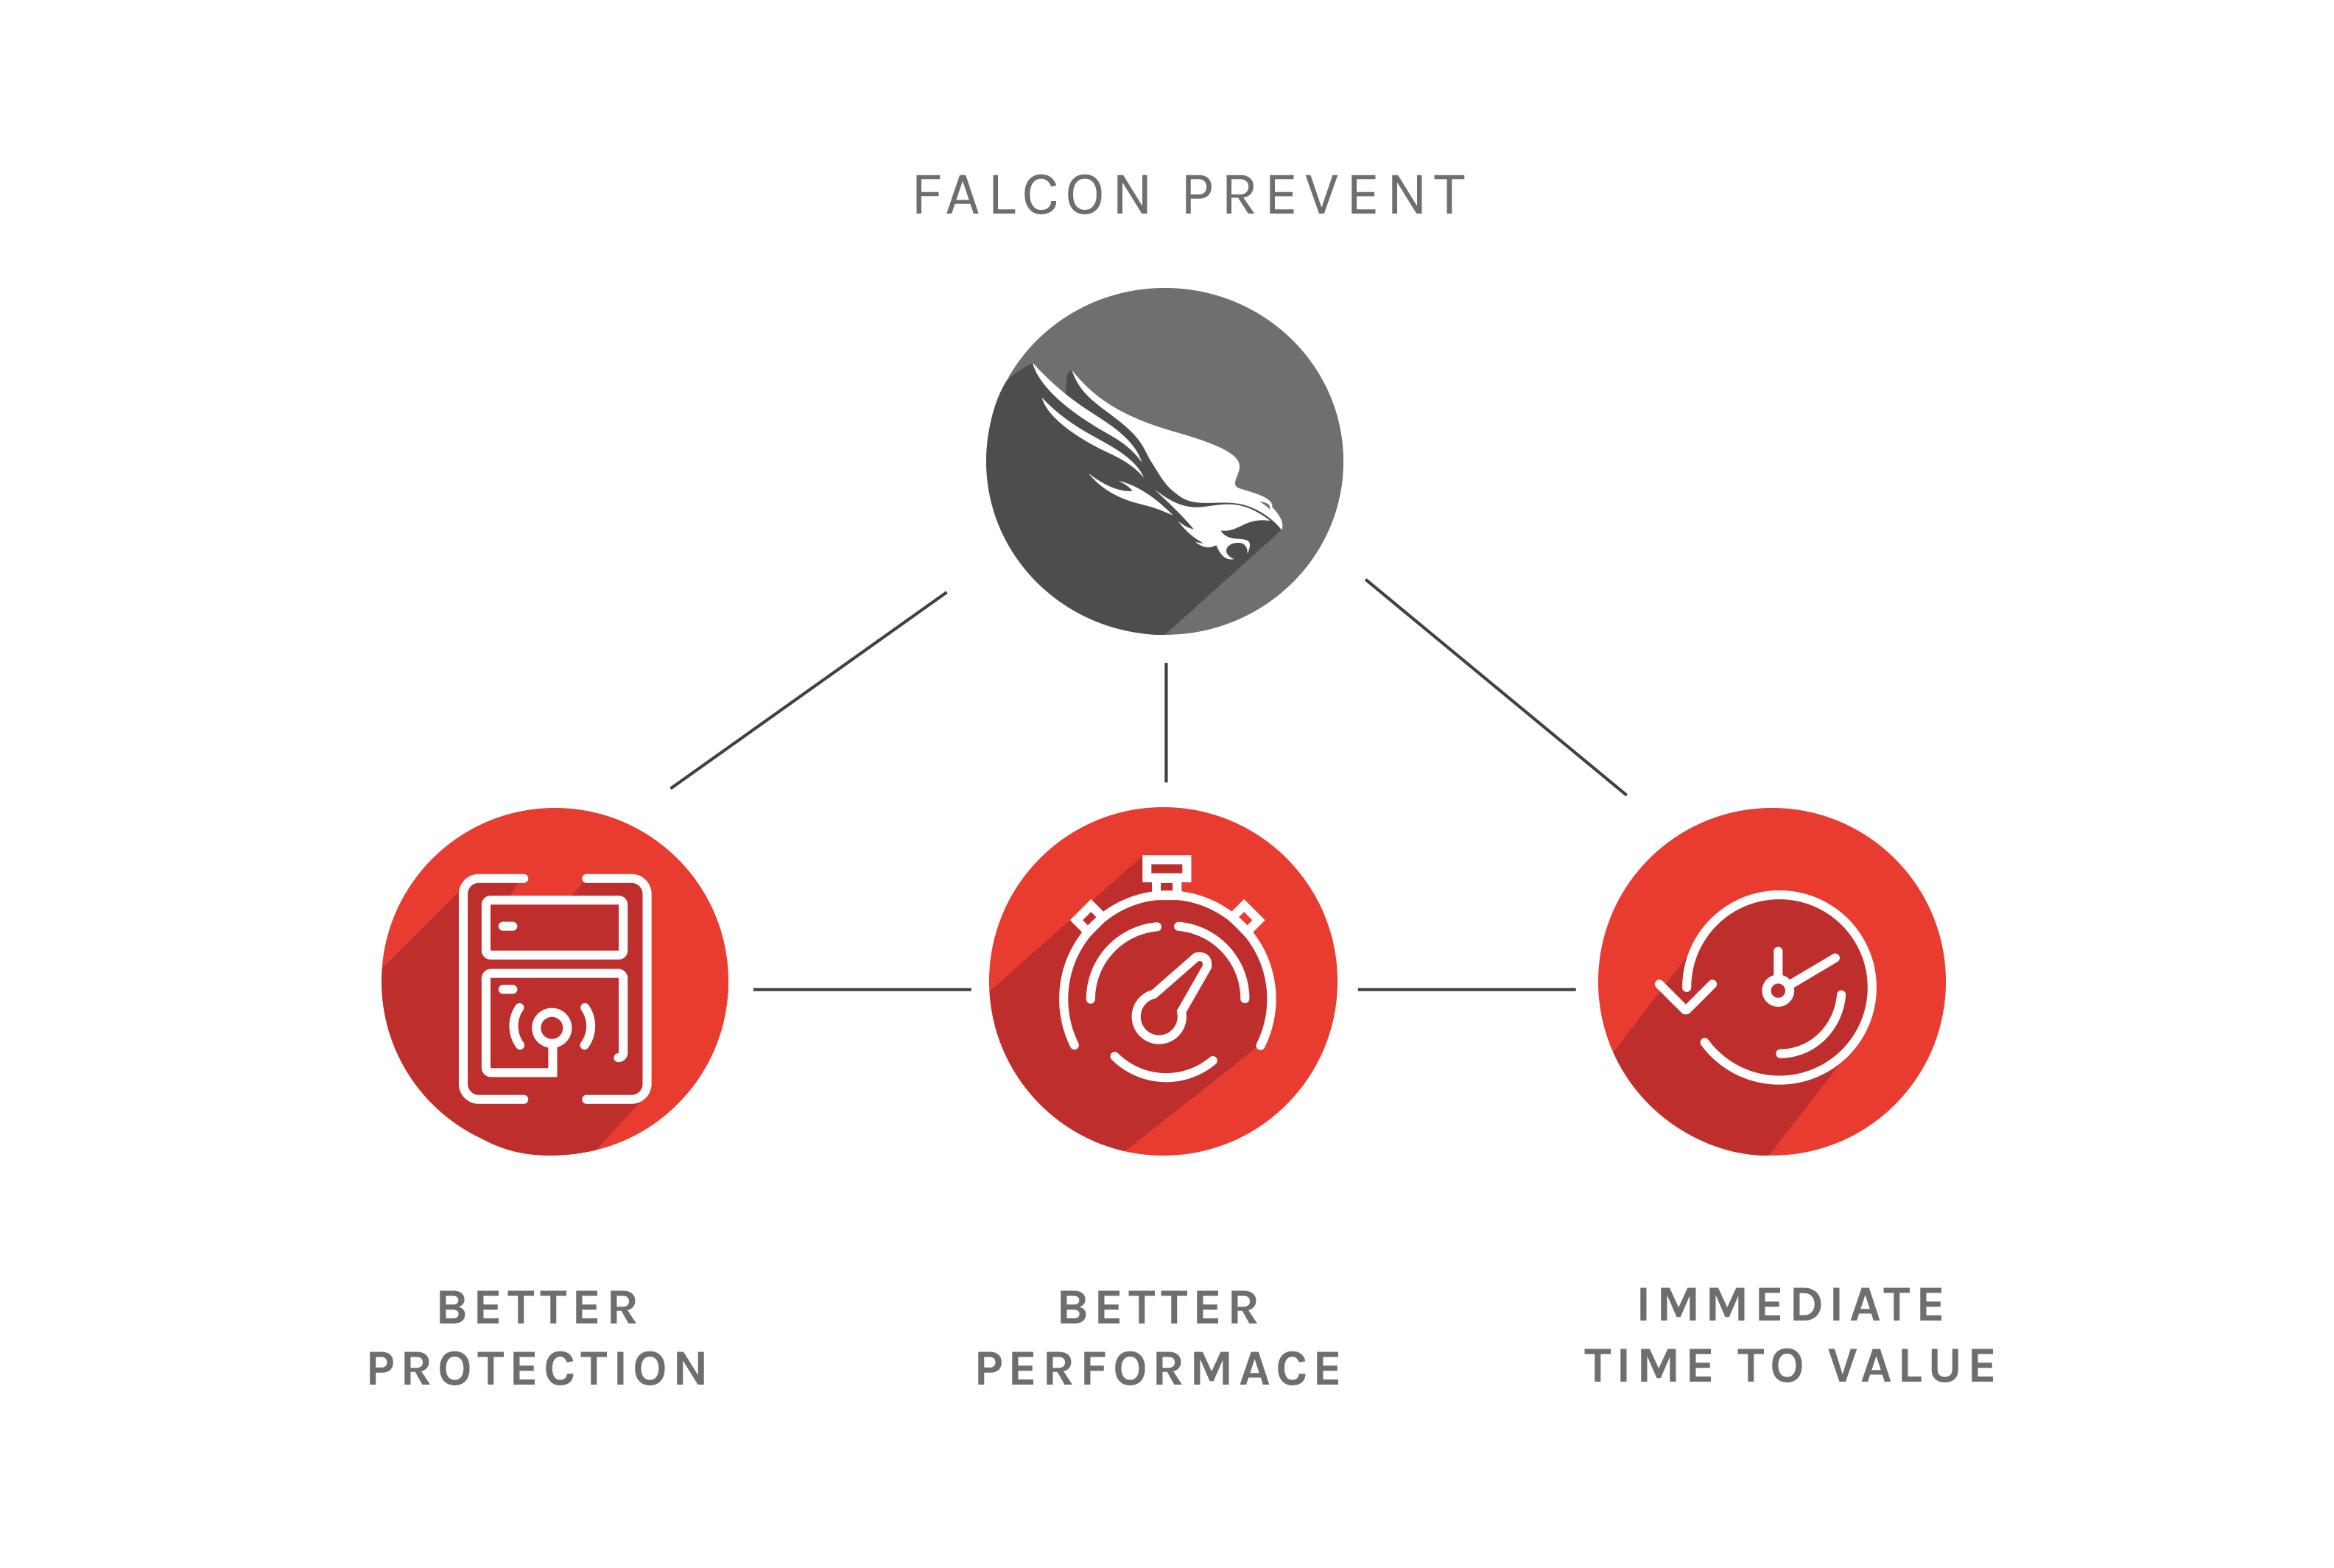 CrowdStrike Logo - Next Gen Antivirus (NGAV): Falcon Prevent | CrowdStrike